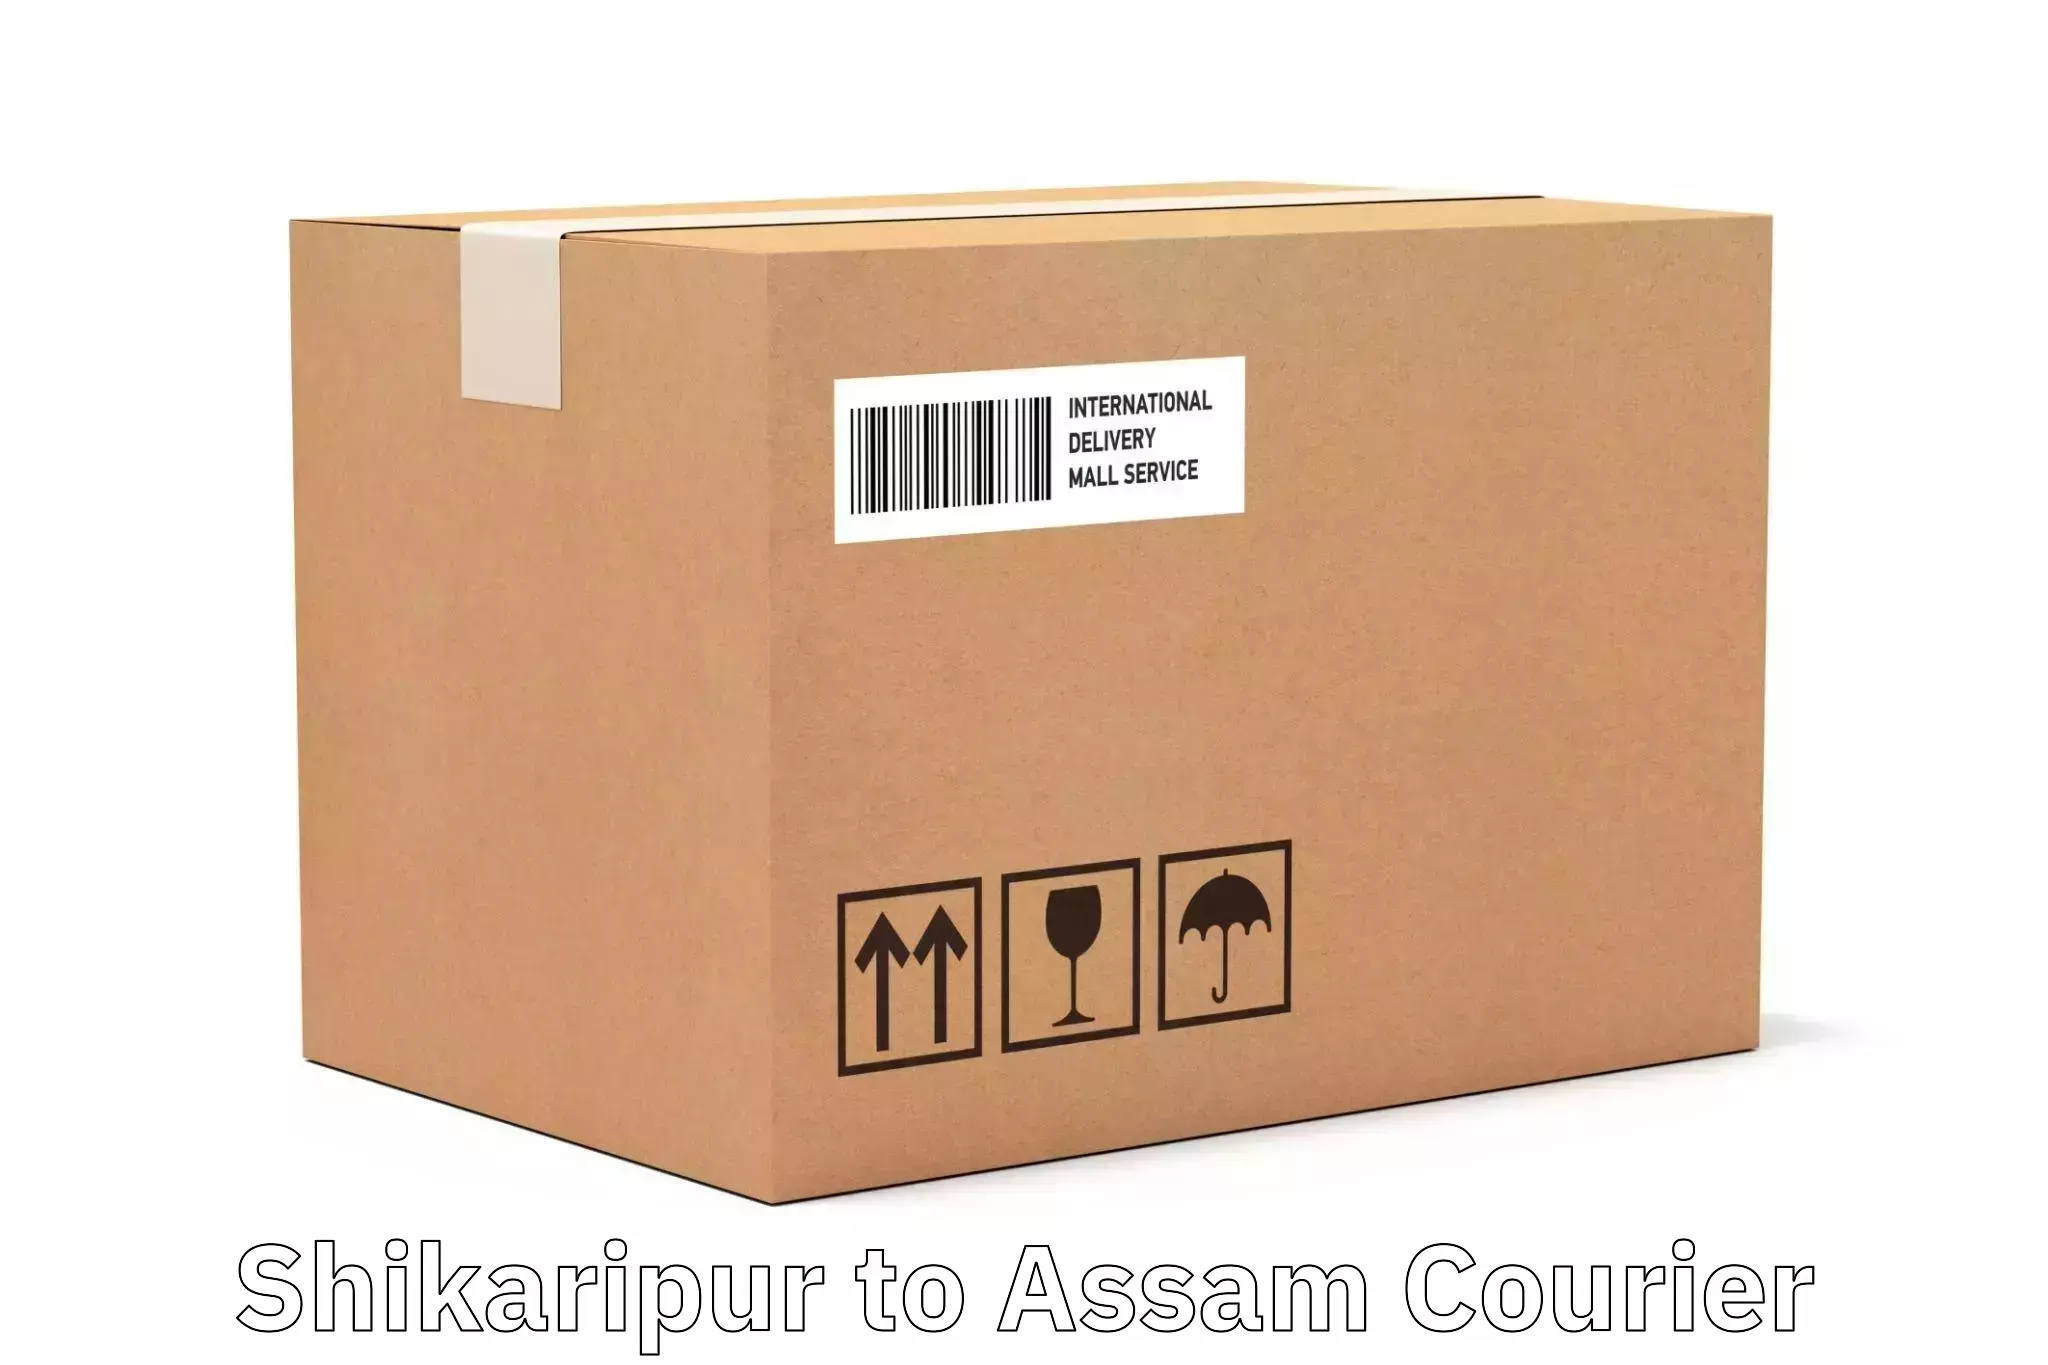 Express courier capabilities Shikaripur to Tinsukia